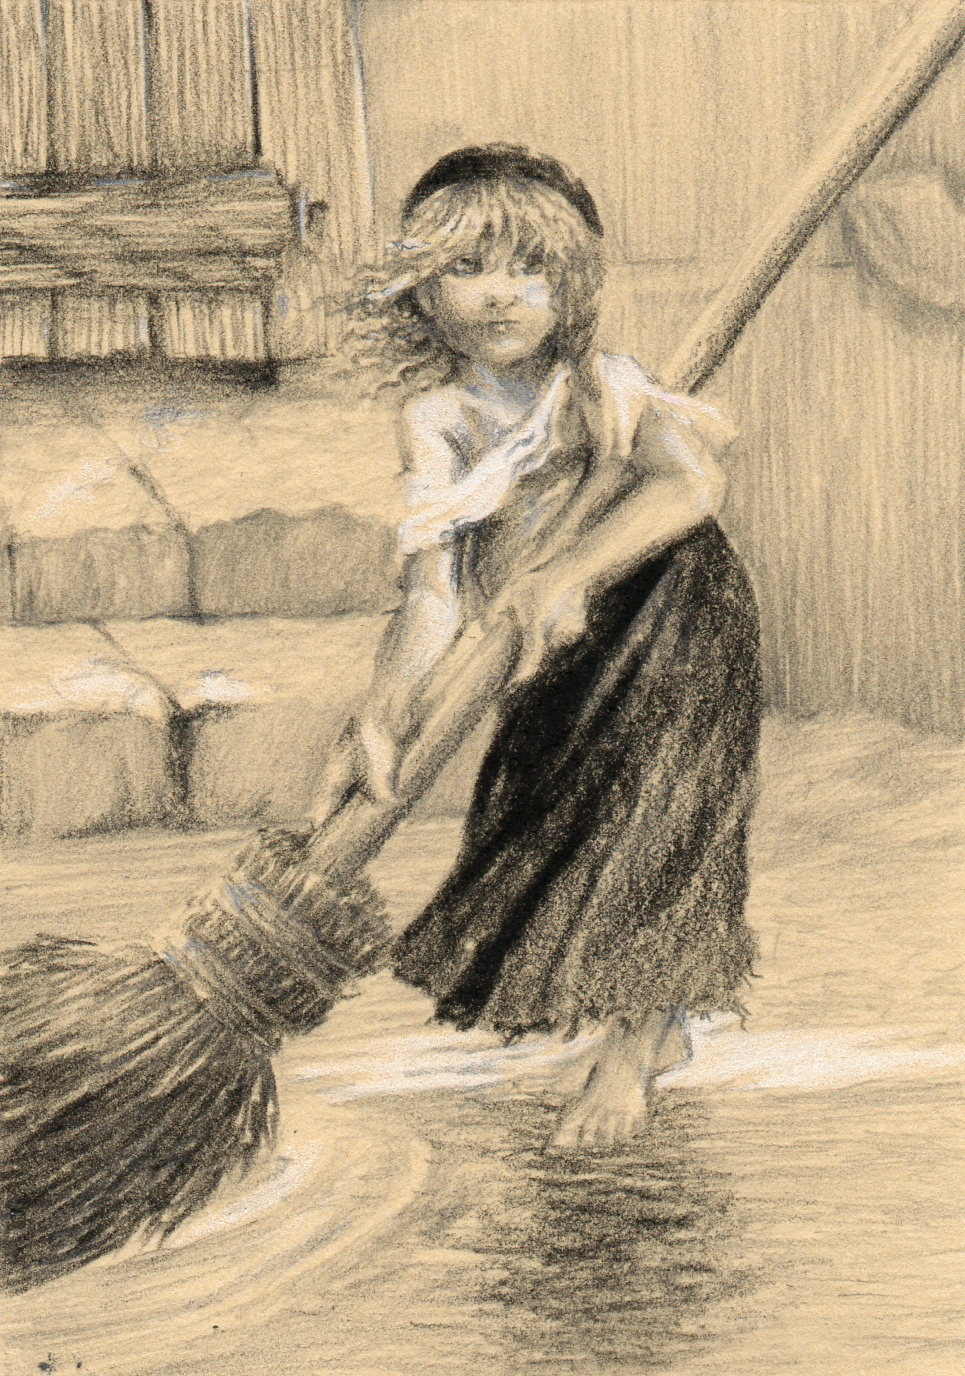 Cosette+sweeping (2).jpg